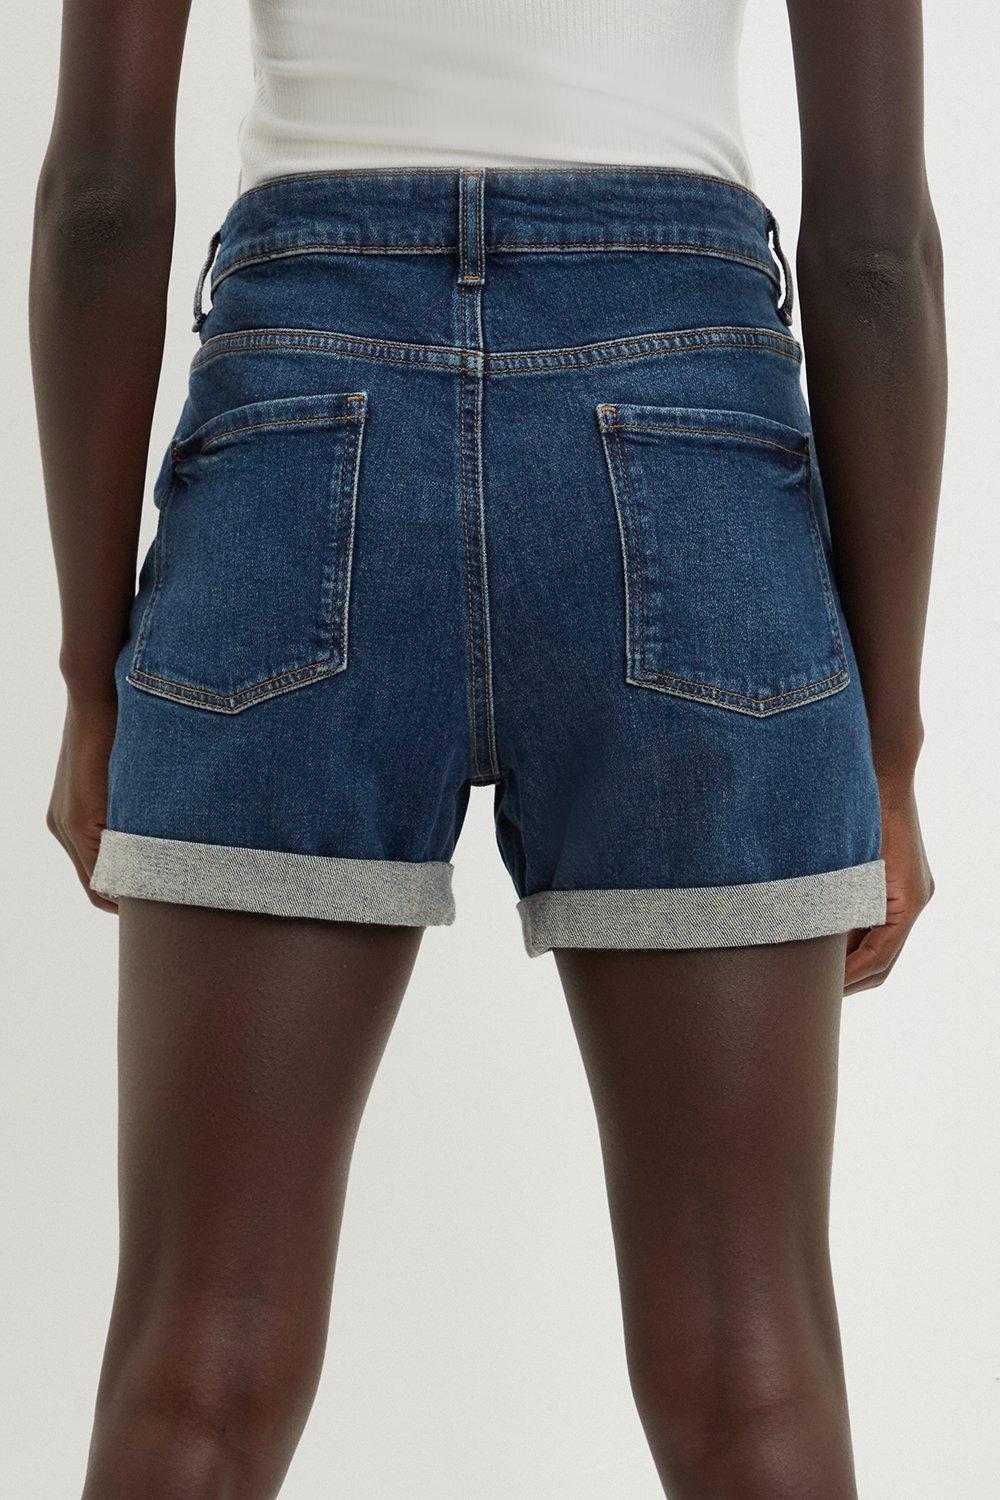 Womens Clothing Shorts Jean and denim shorts Goodthreads Denim Turn-cuff in Blue 